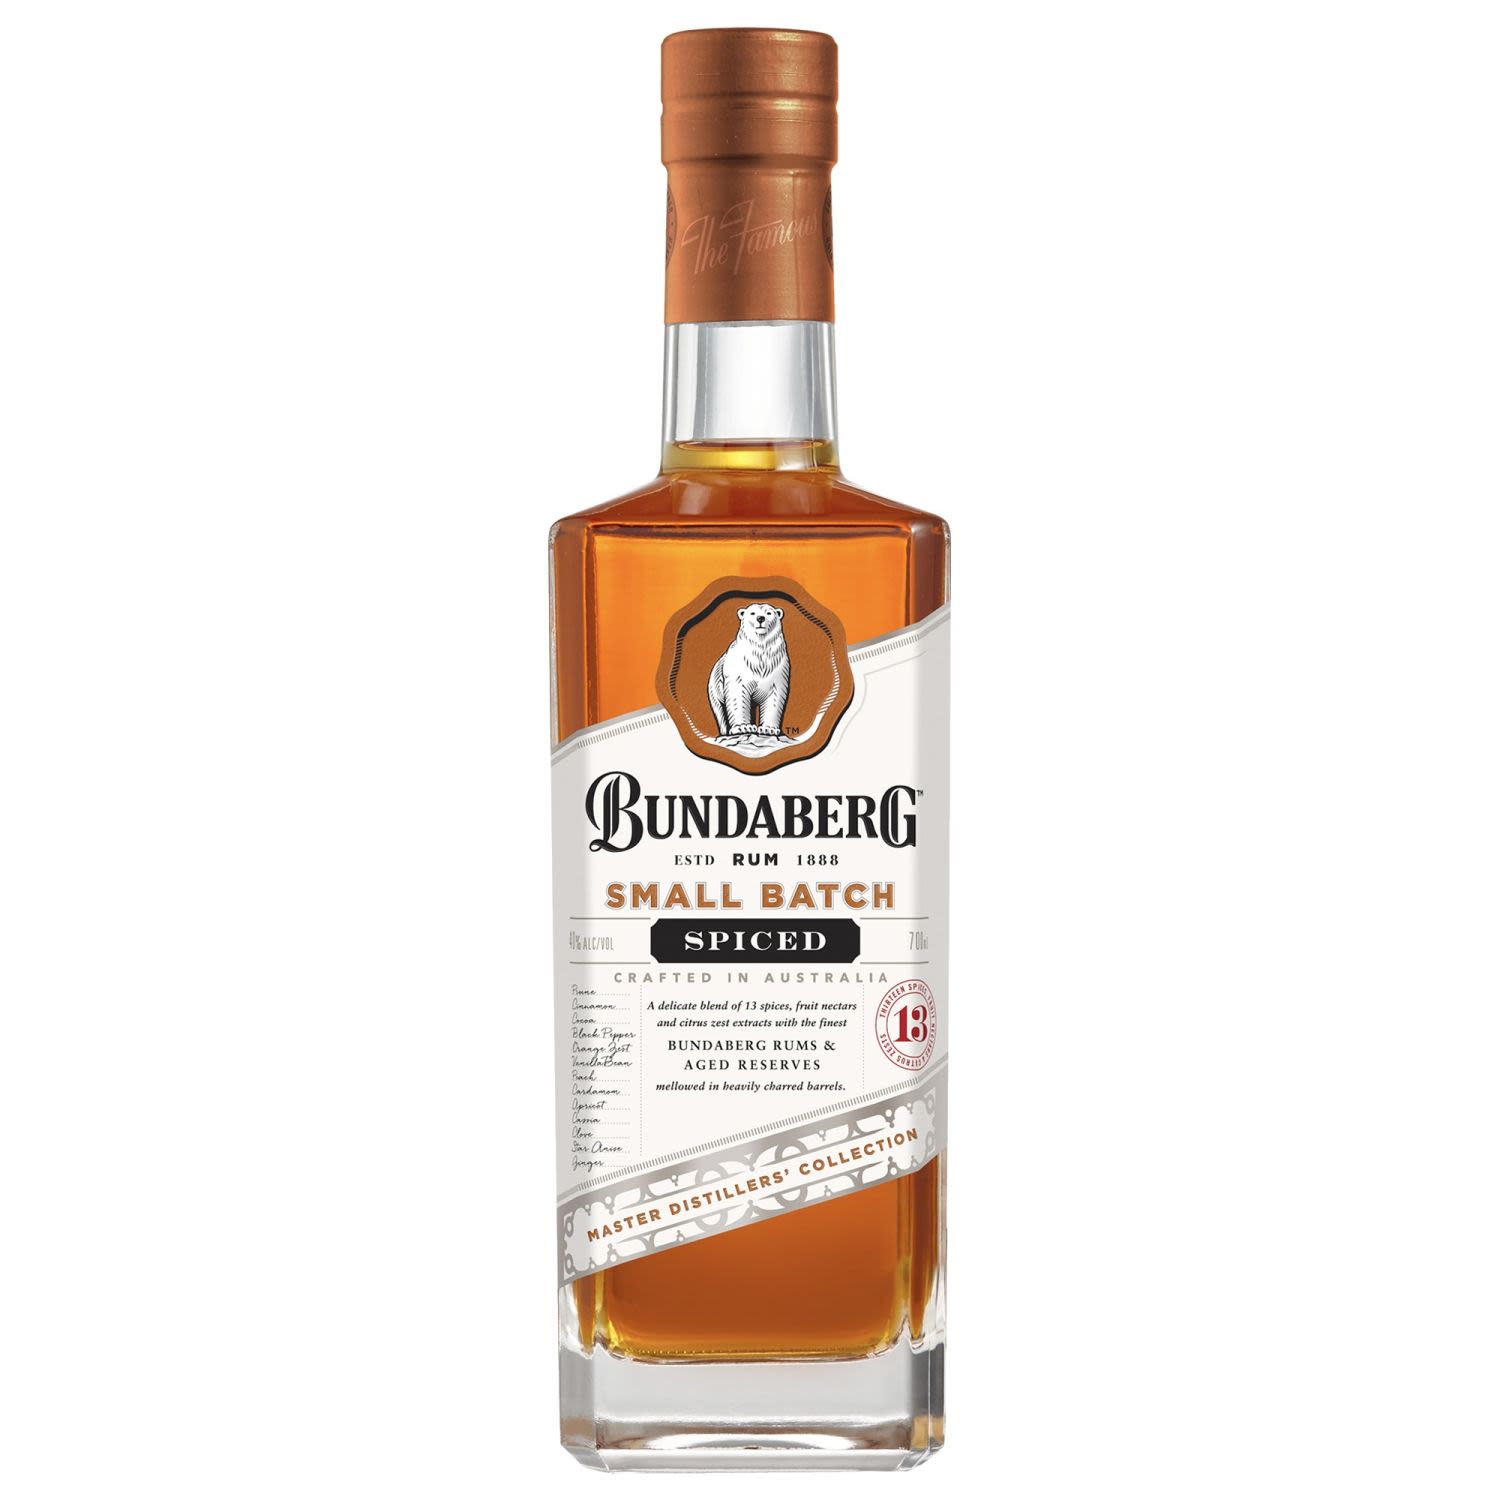 Bundaberg Small Batch Spiced Rum 700mL Bottle